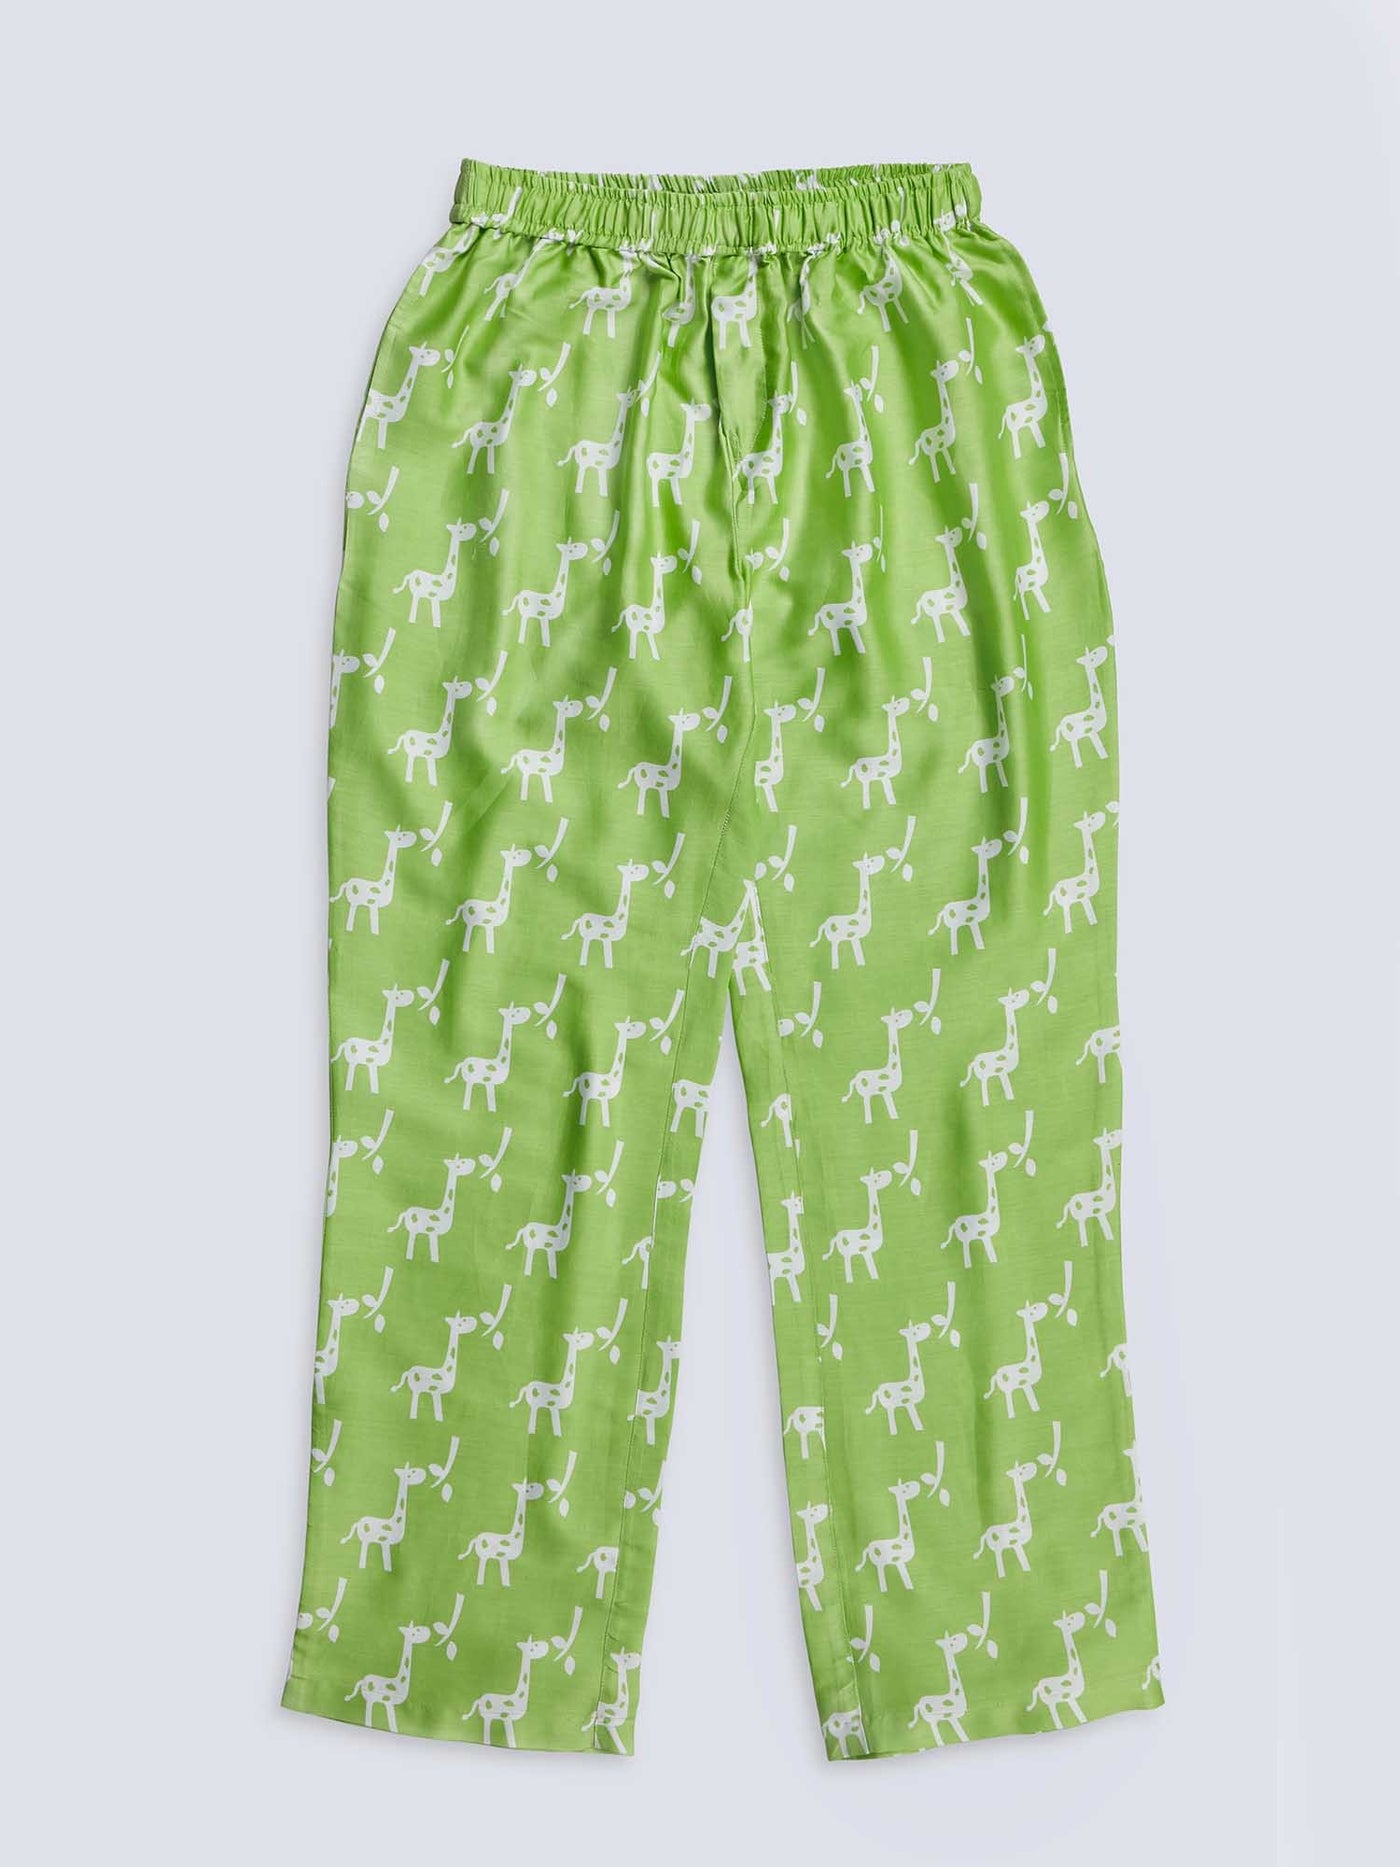 Giraffe Mens Pajama